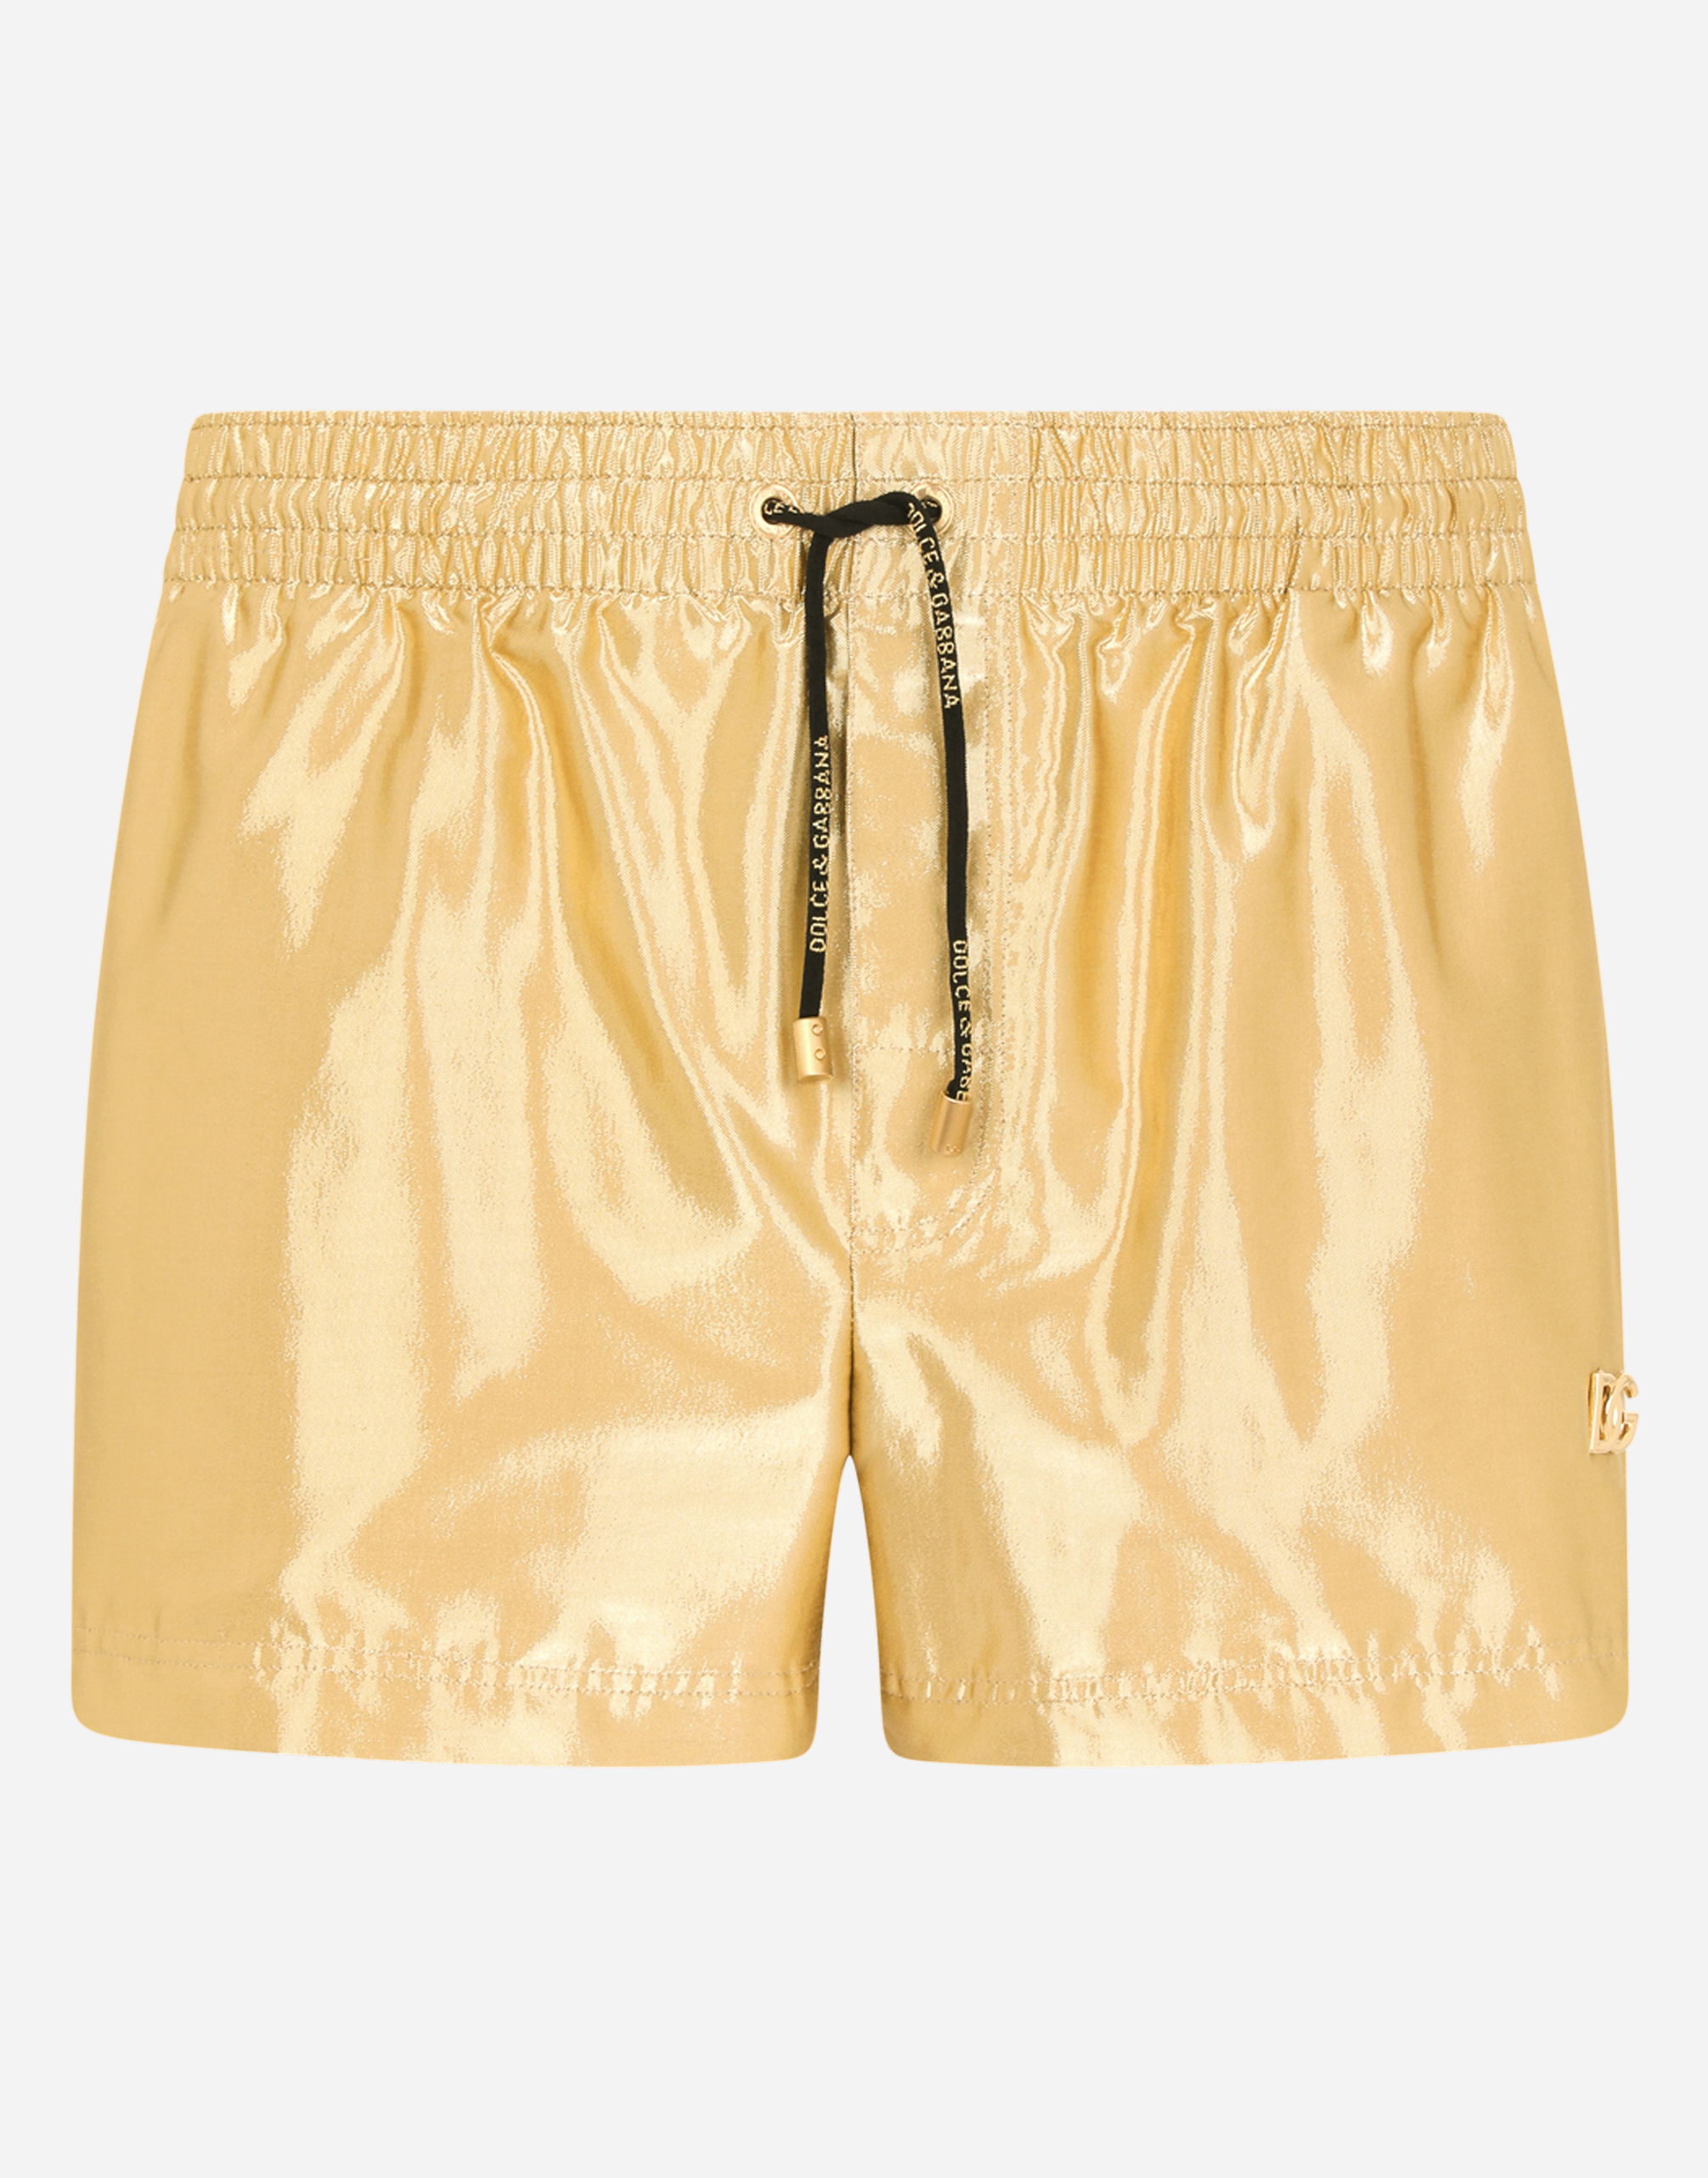 Short swim trunks with metal DG logo in Gold